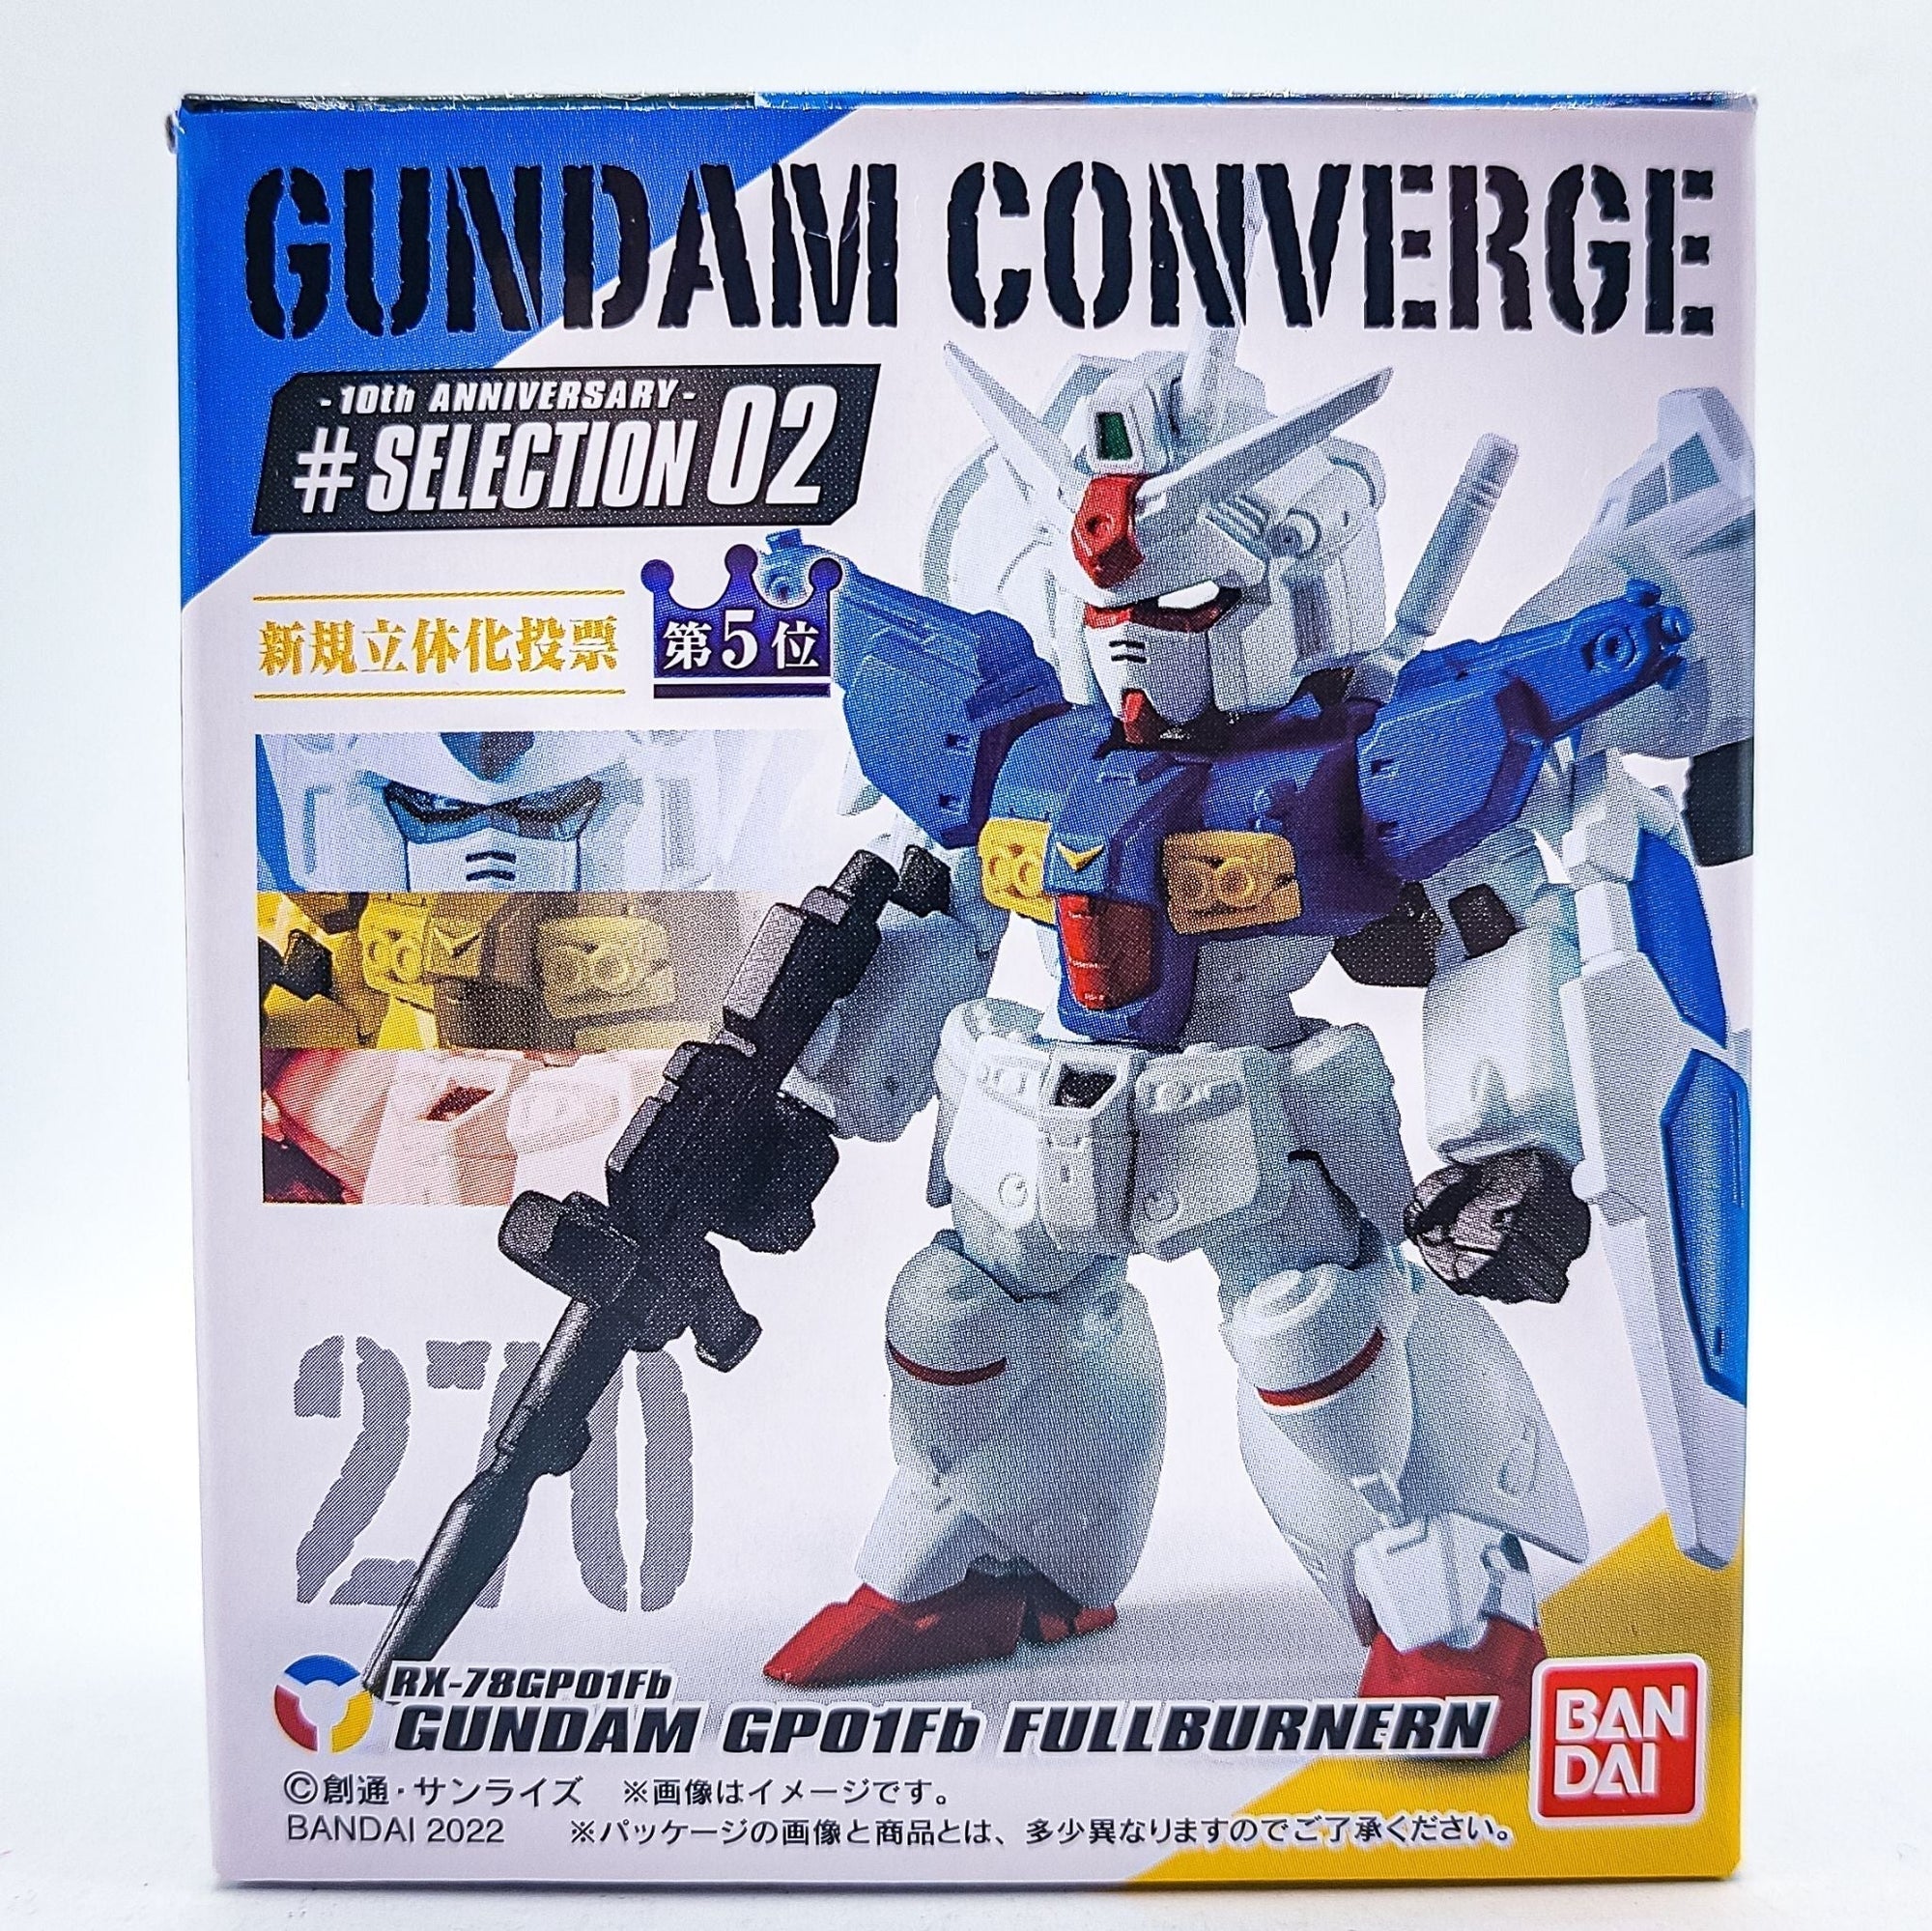 Gundam Converge #270 Gp01FB by Bandai - 1